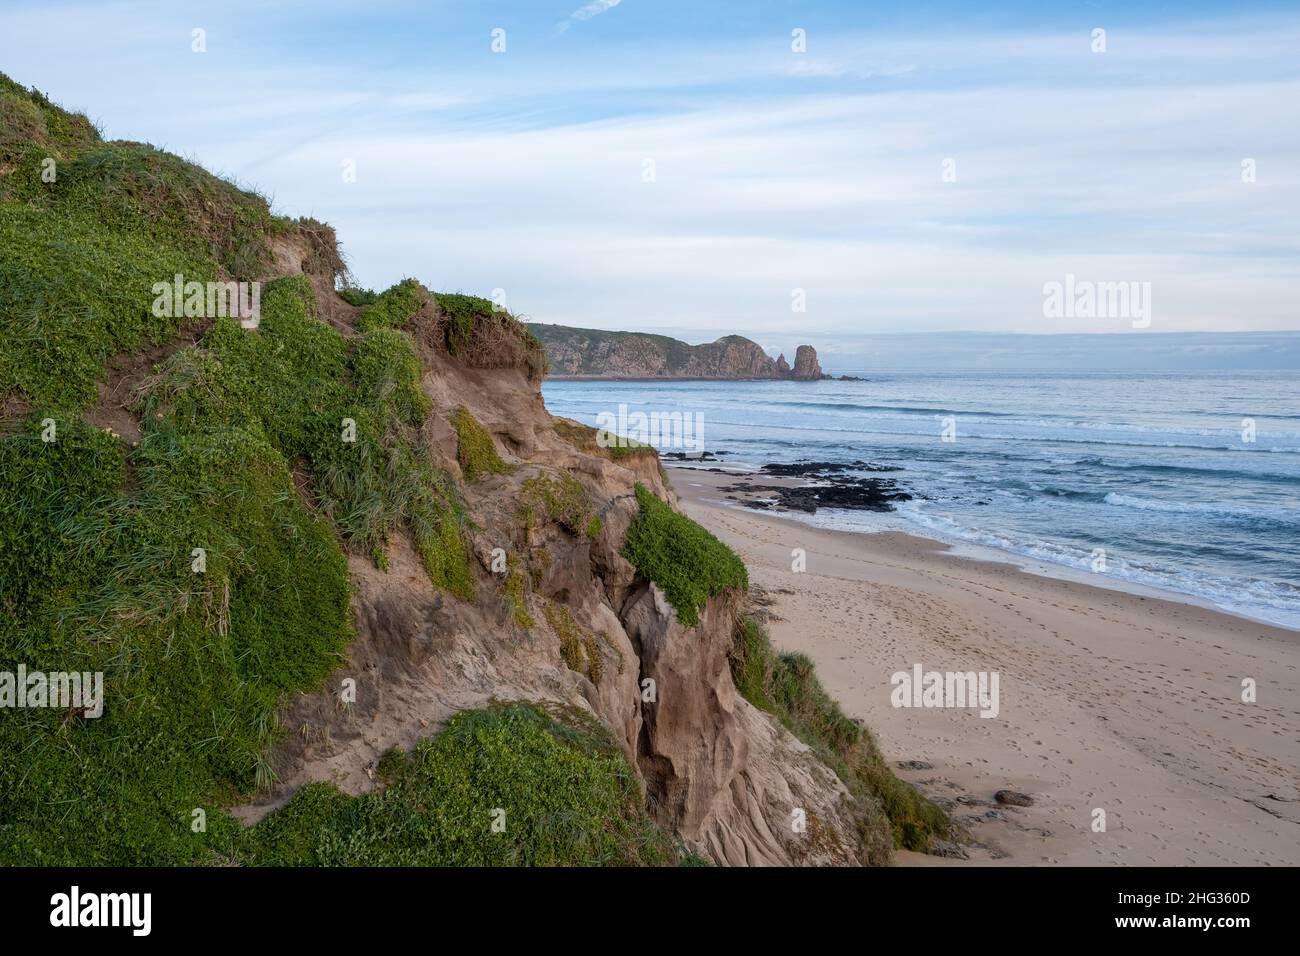 Eroding cliffs near scenic beach on Mornington Peninsula, Australia Stock Photo